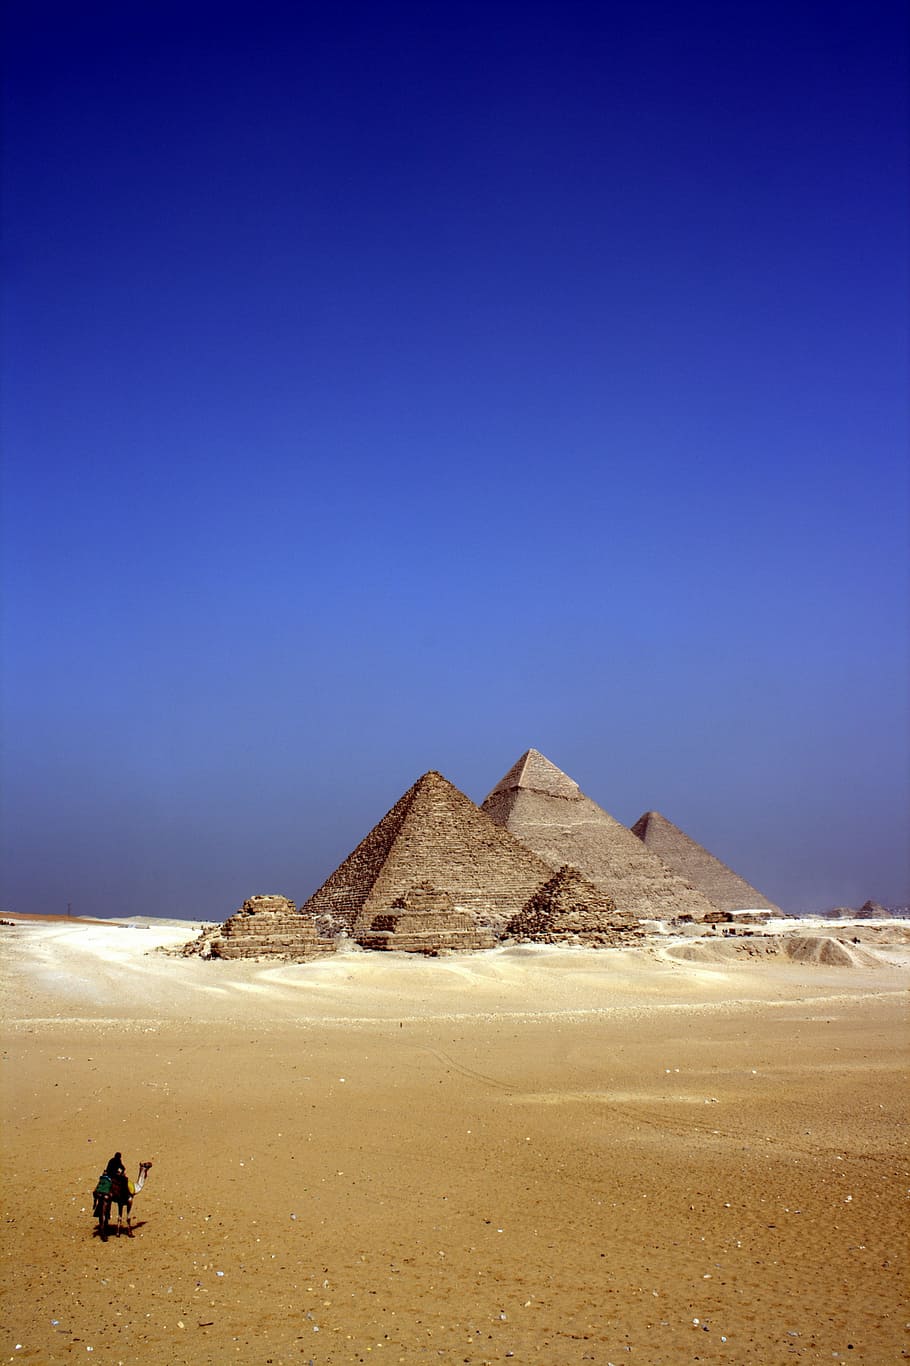 pyramid during daytime, alone, camel, desert, egypt, person, pyramids, sand, sky, pyramid